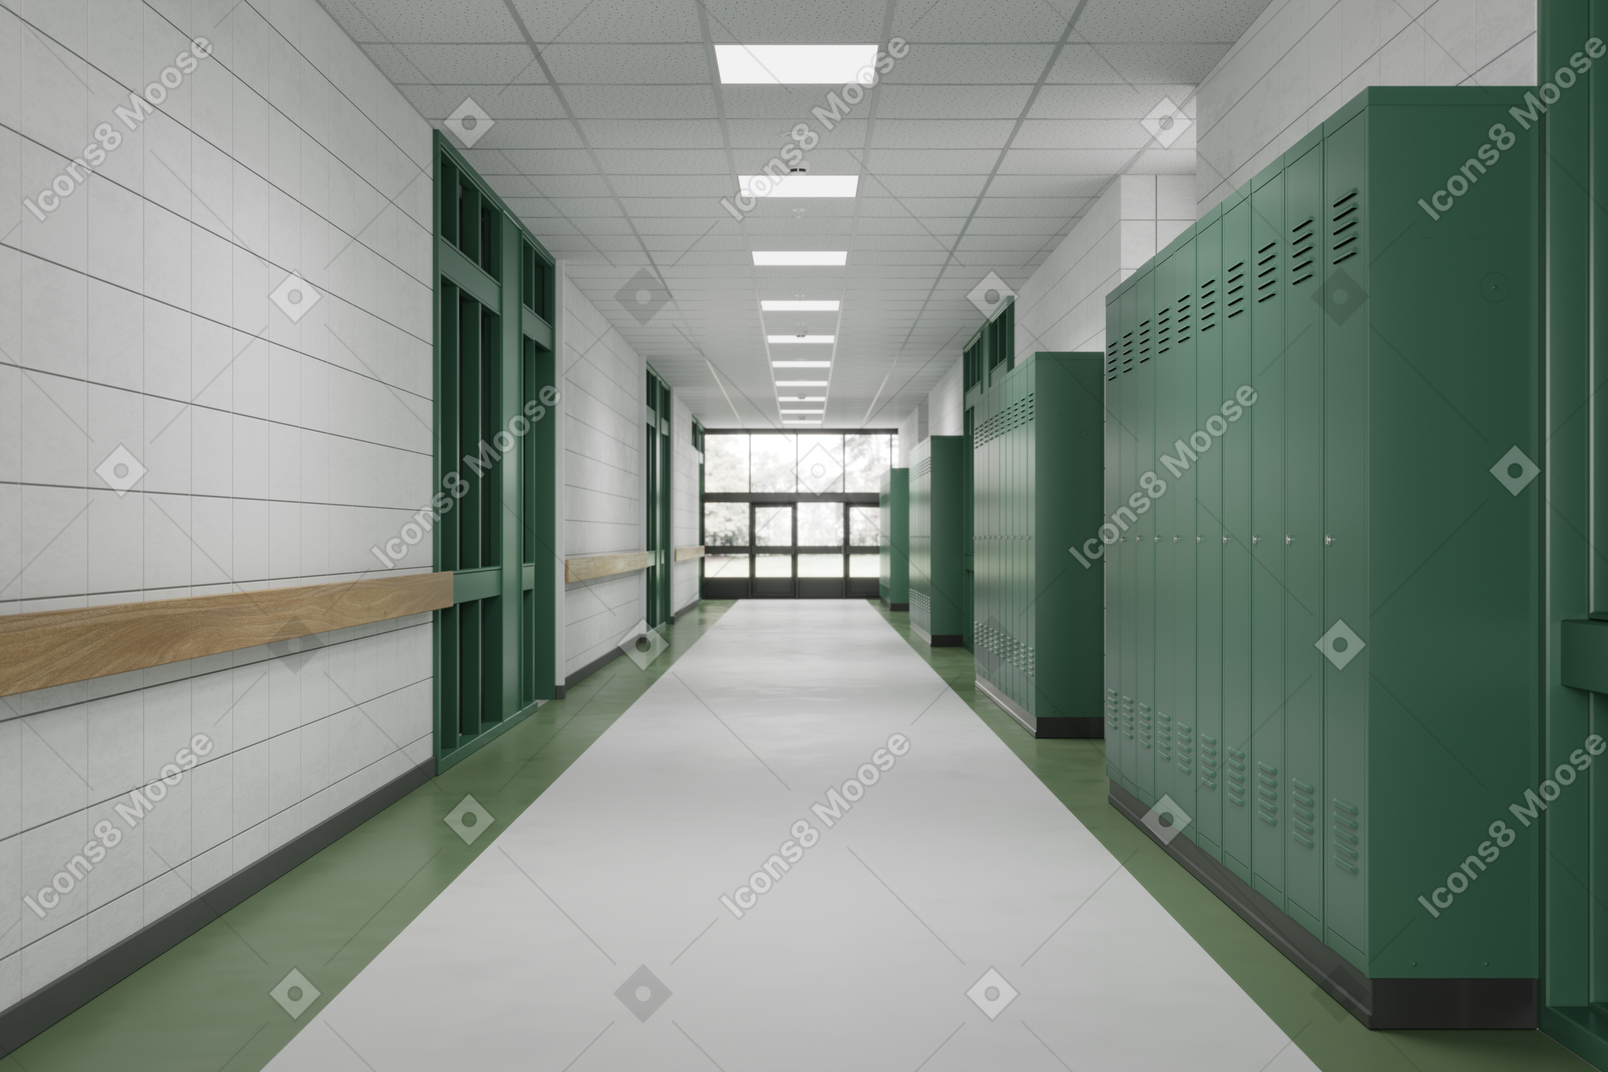 High school lobby green color lockers